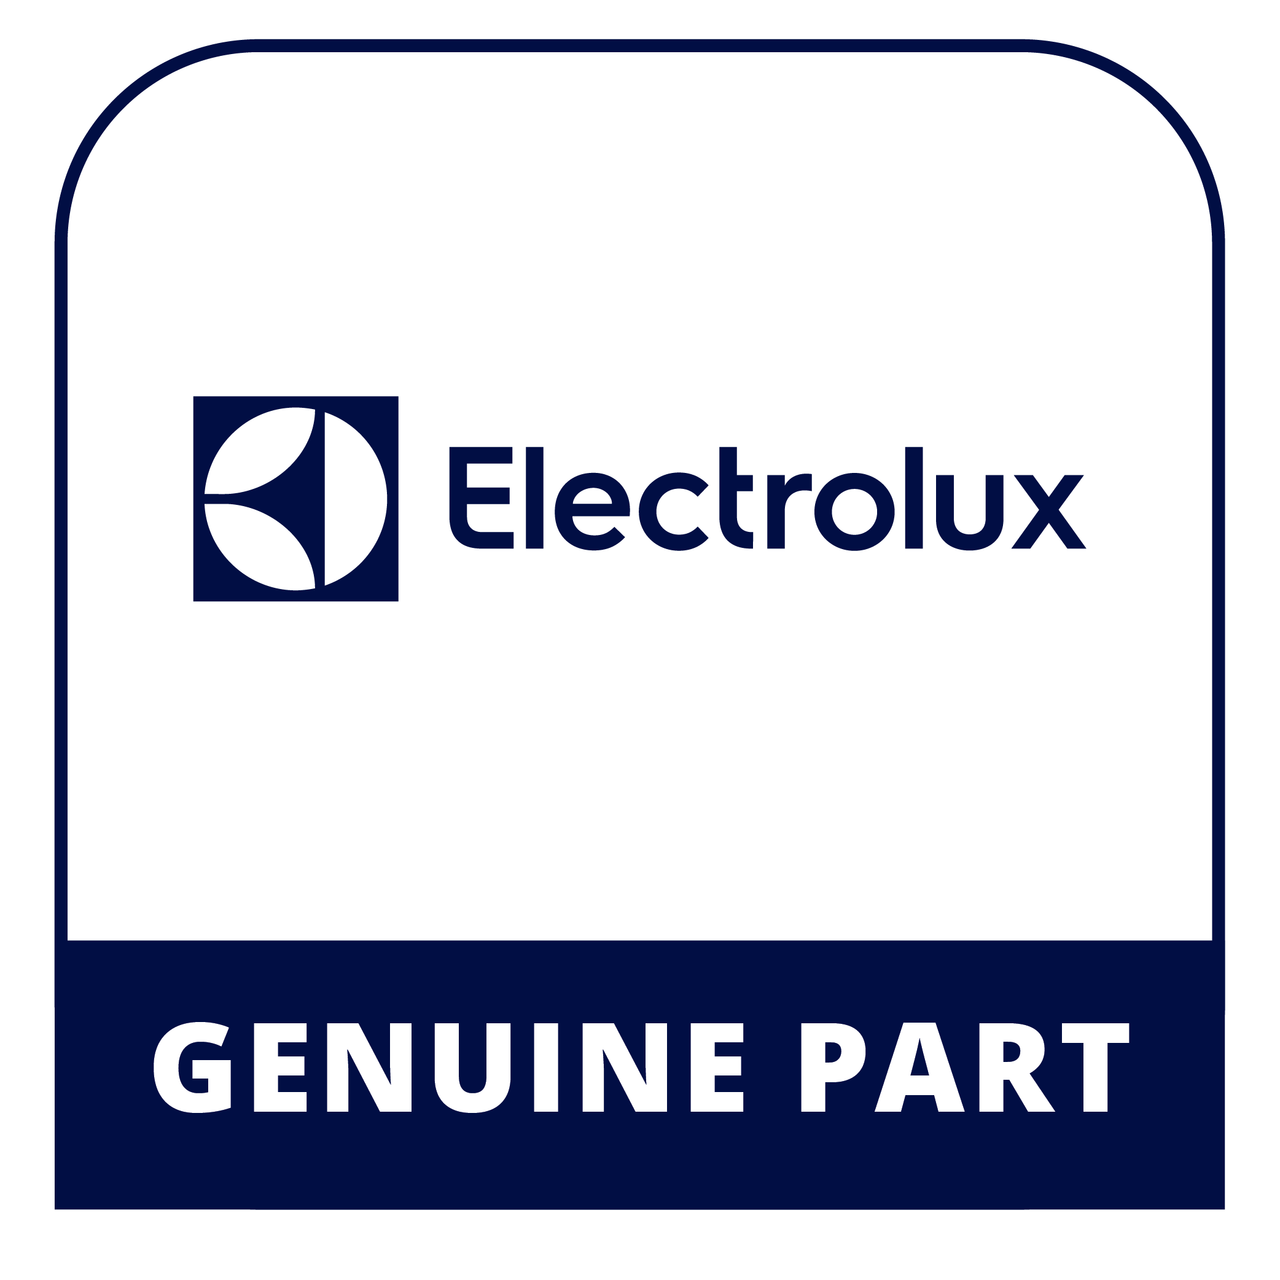 Frigidaire - Electrolux 316536620 Ignitor/Orifice Ass - Genuine Electrolux Part